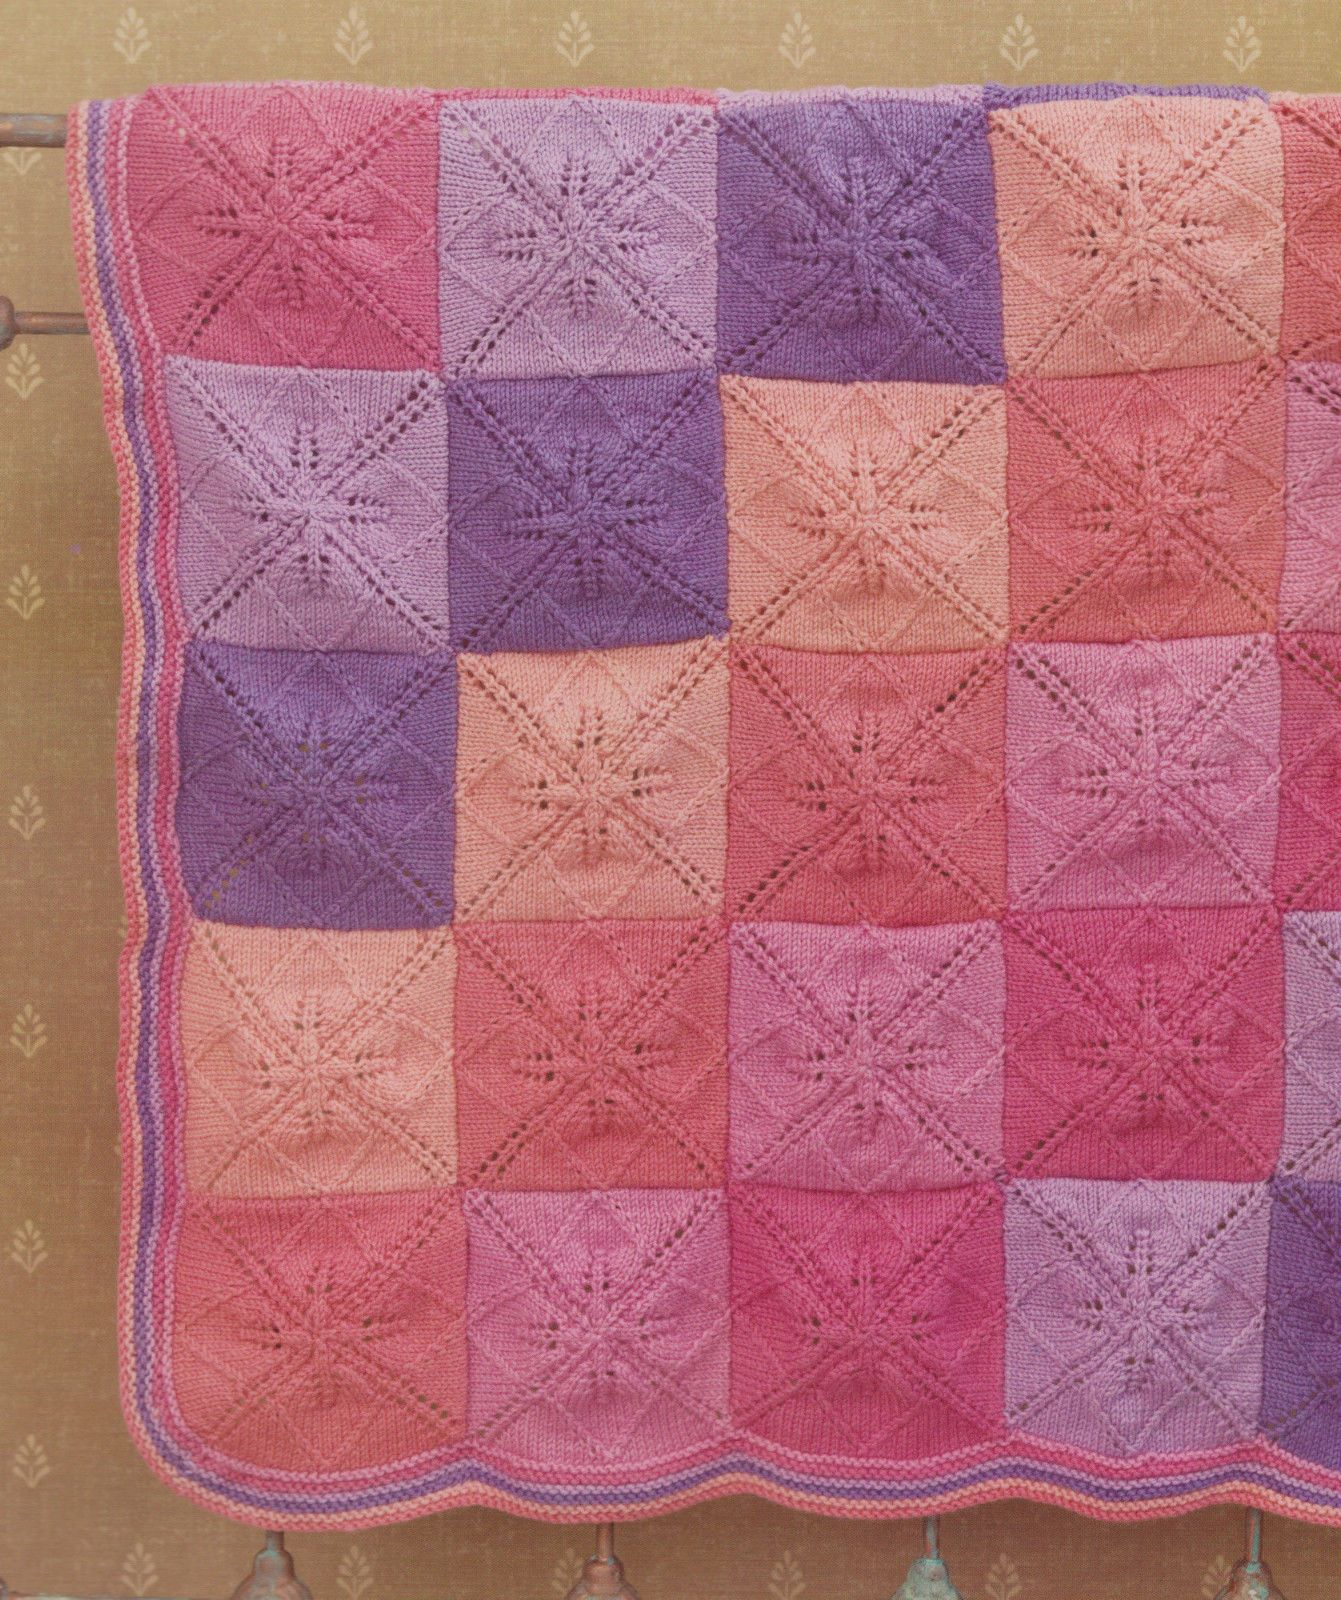 Knitted Squares Patterns Free Pdf Ba Blanket Knitting Pattern Individual Leaf Squares Striped